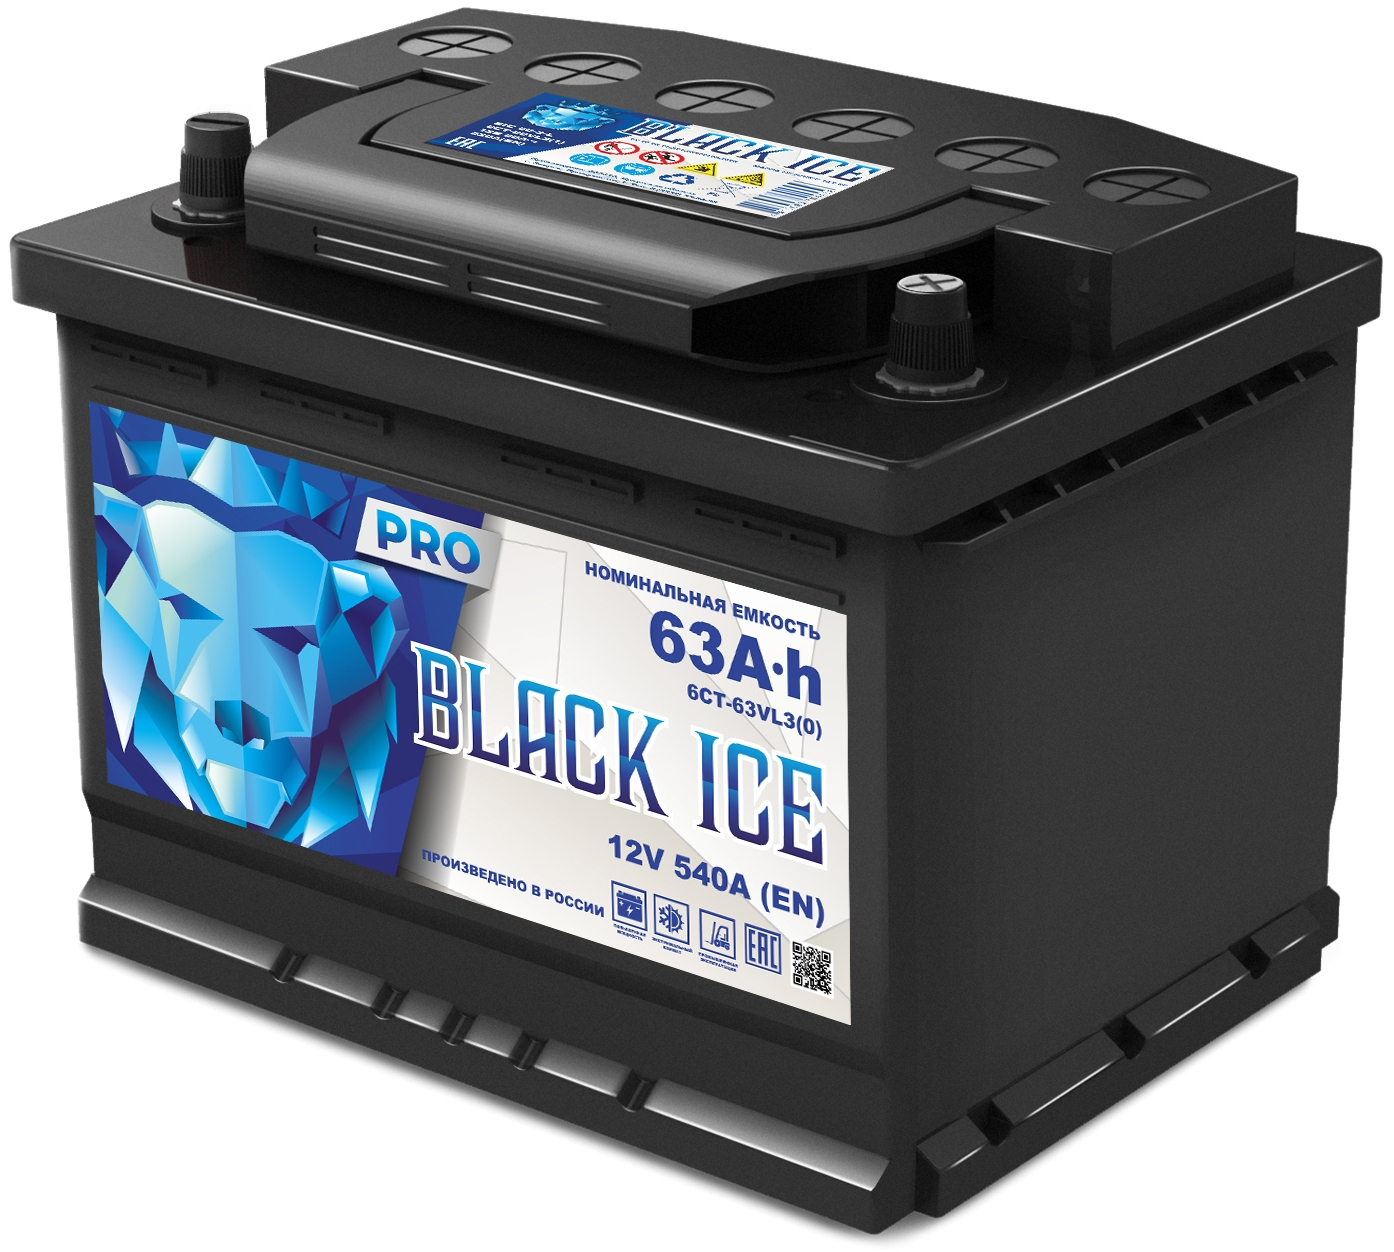 фото Автомобильный аккумулятор black ice pro 6ст-63.0 vl